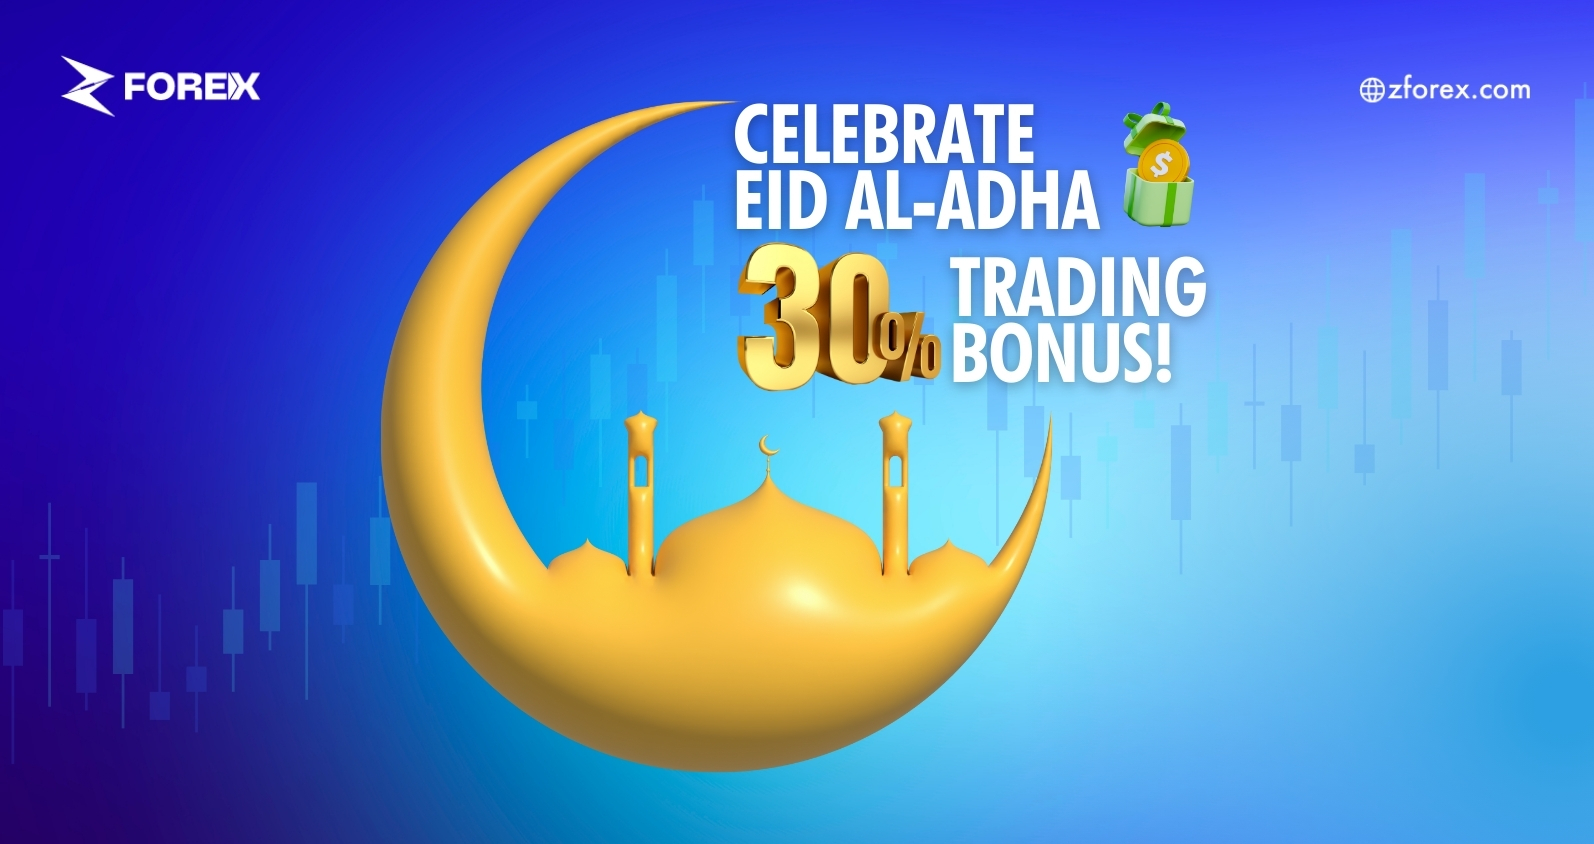 Celebrate Eid al-Adha with a 30% Trading Bonus!